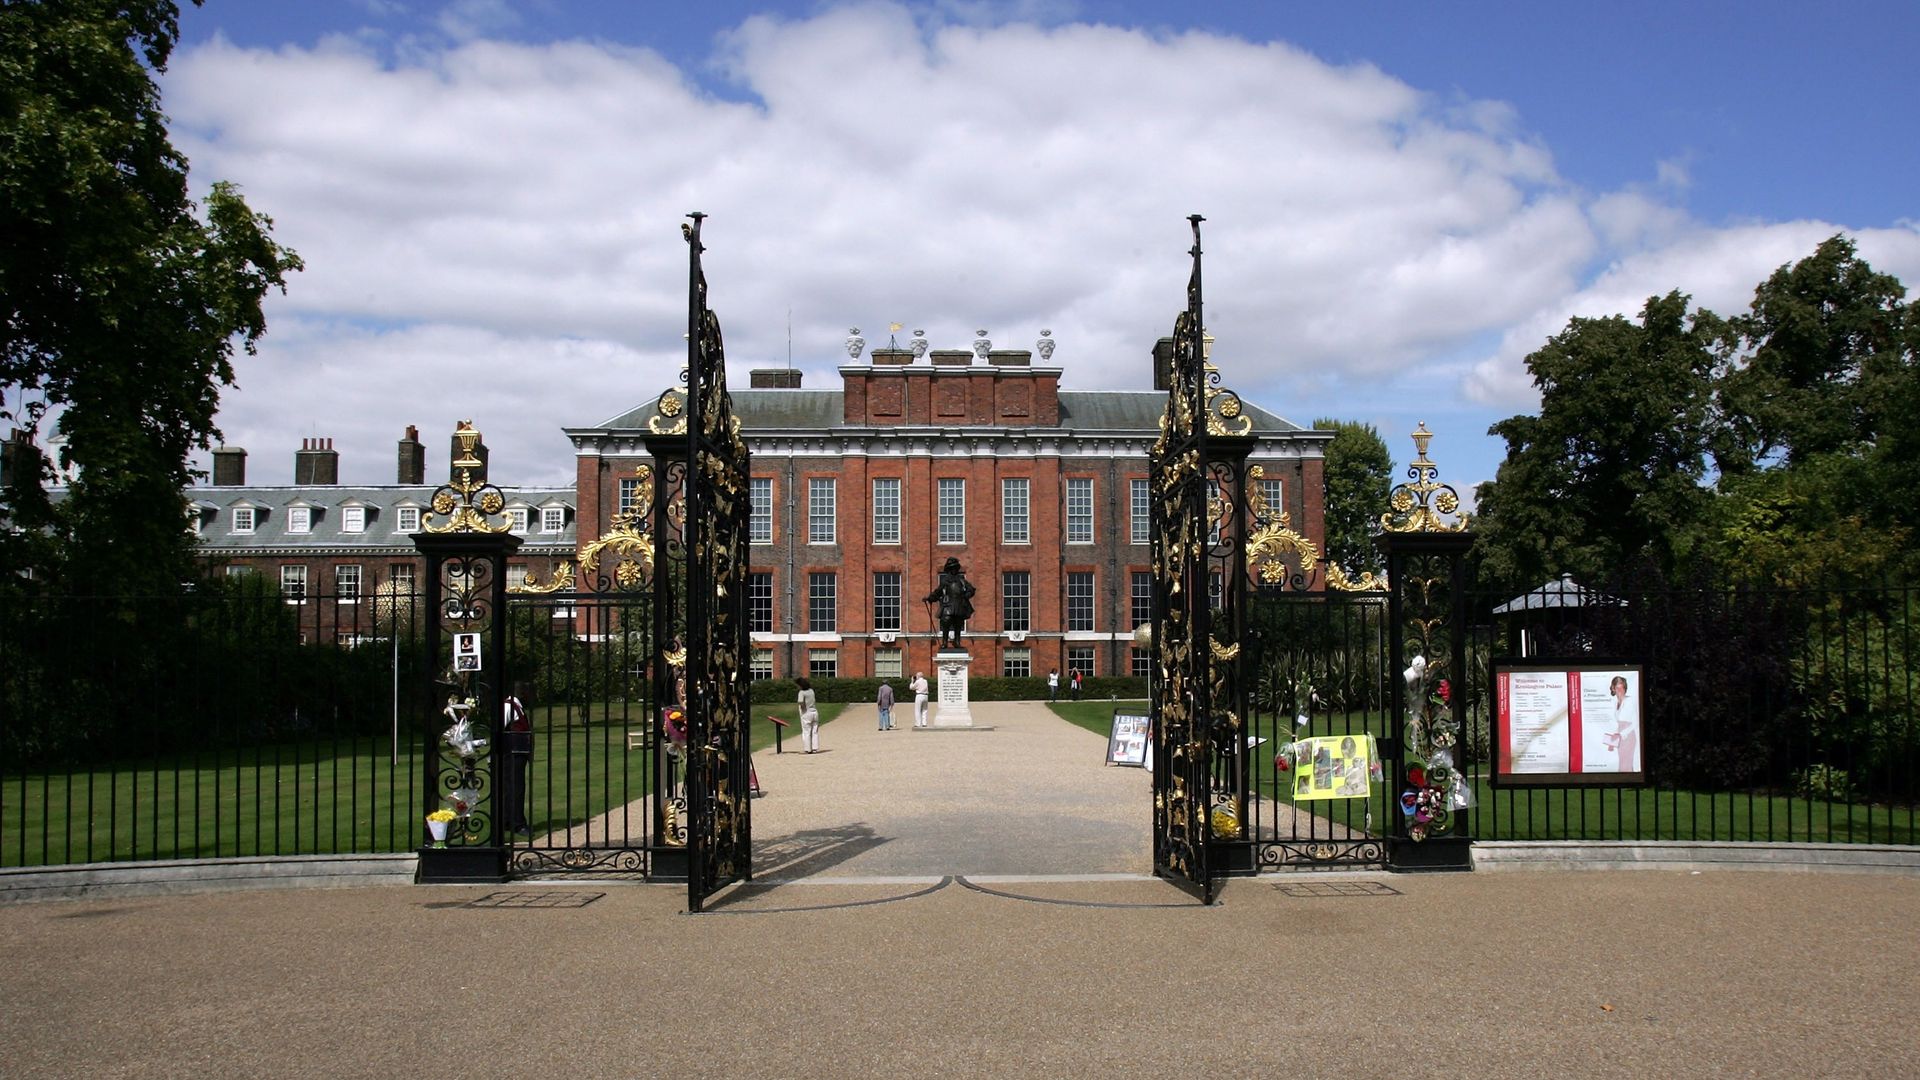 A photo of Kensington Palace against a blue sky